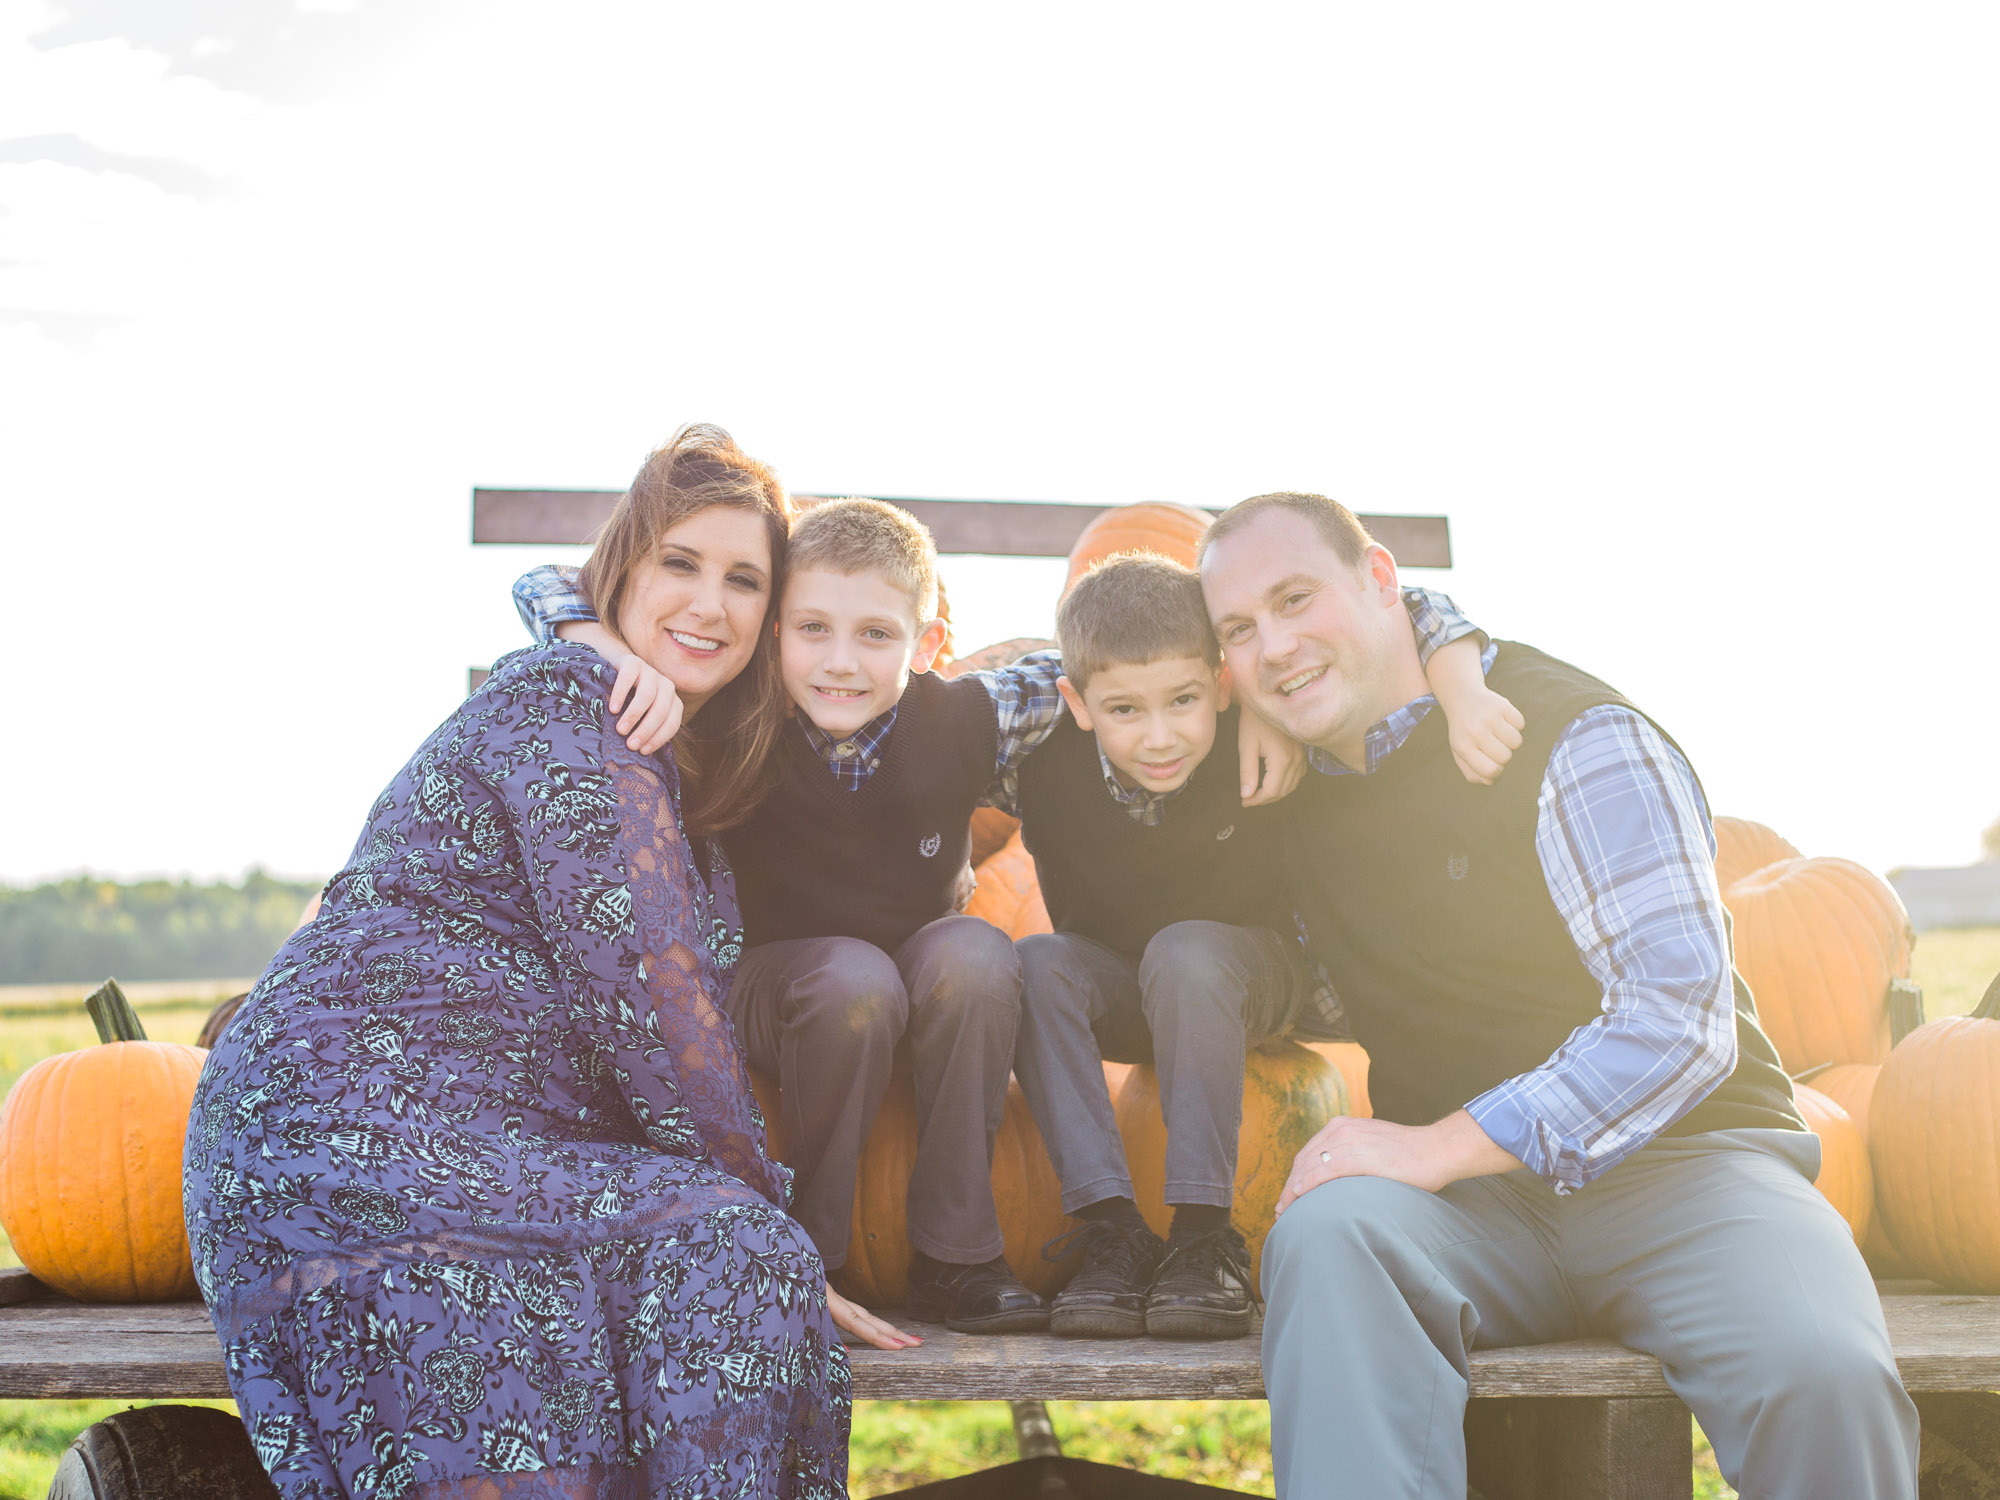 Fall Family Photos by Cleveland Wedding Photographer Matt Erickson Photography